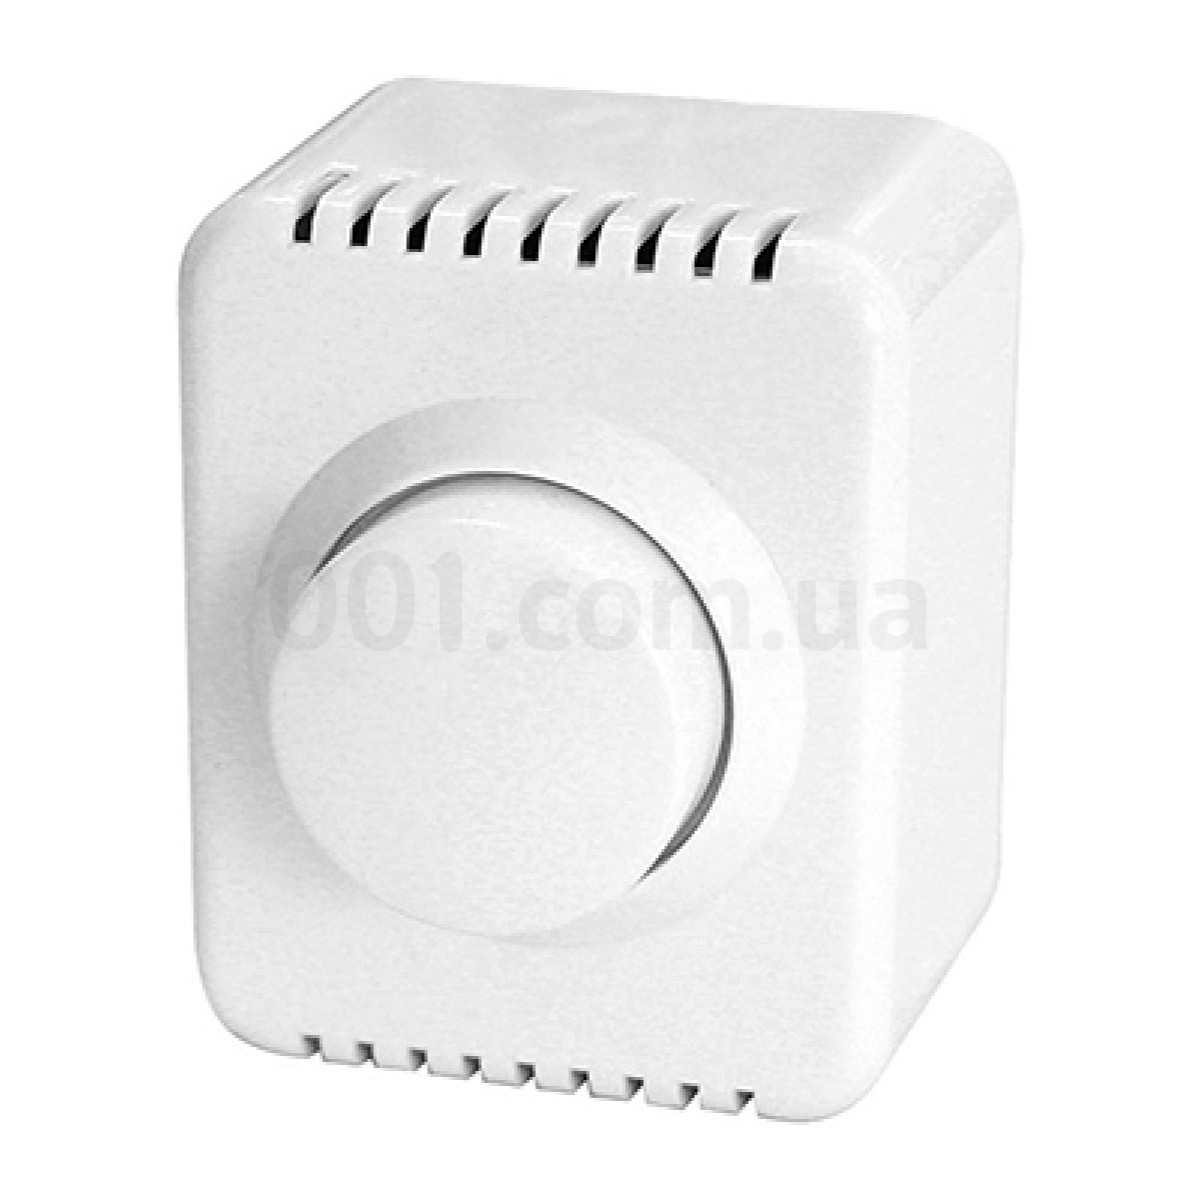 Светорегулятор (диммер) 500 Вт (блистерная упаковка) белый e.touch.1311.w.blister серия e.touch, E.NEXT 98_98.jpg - фото 1